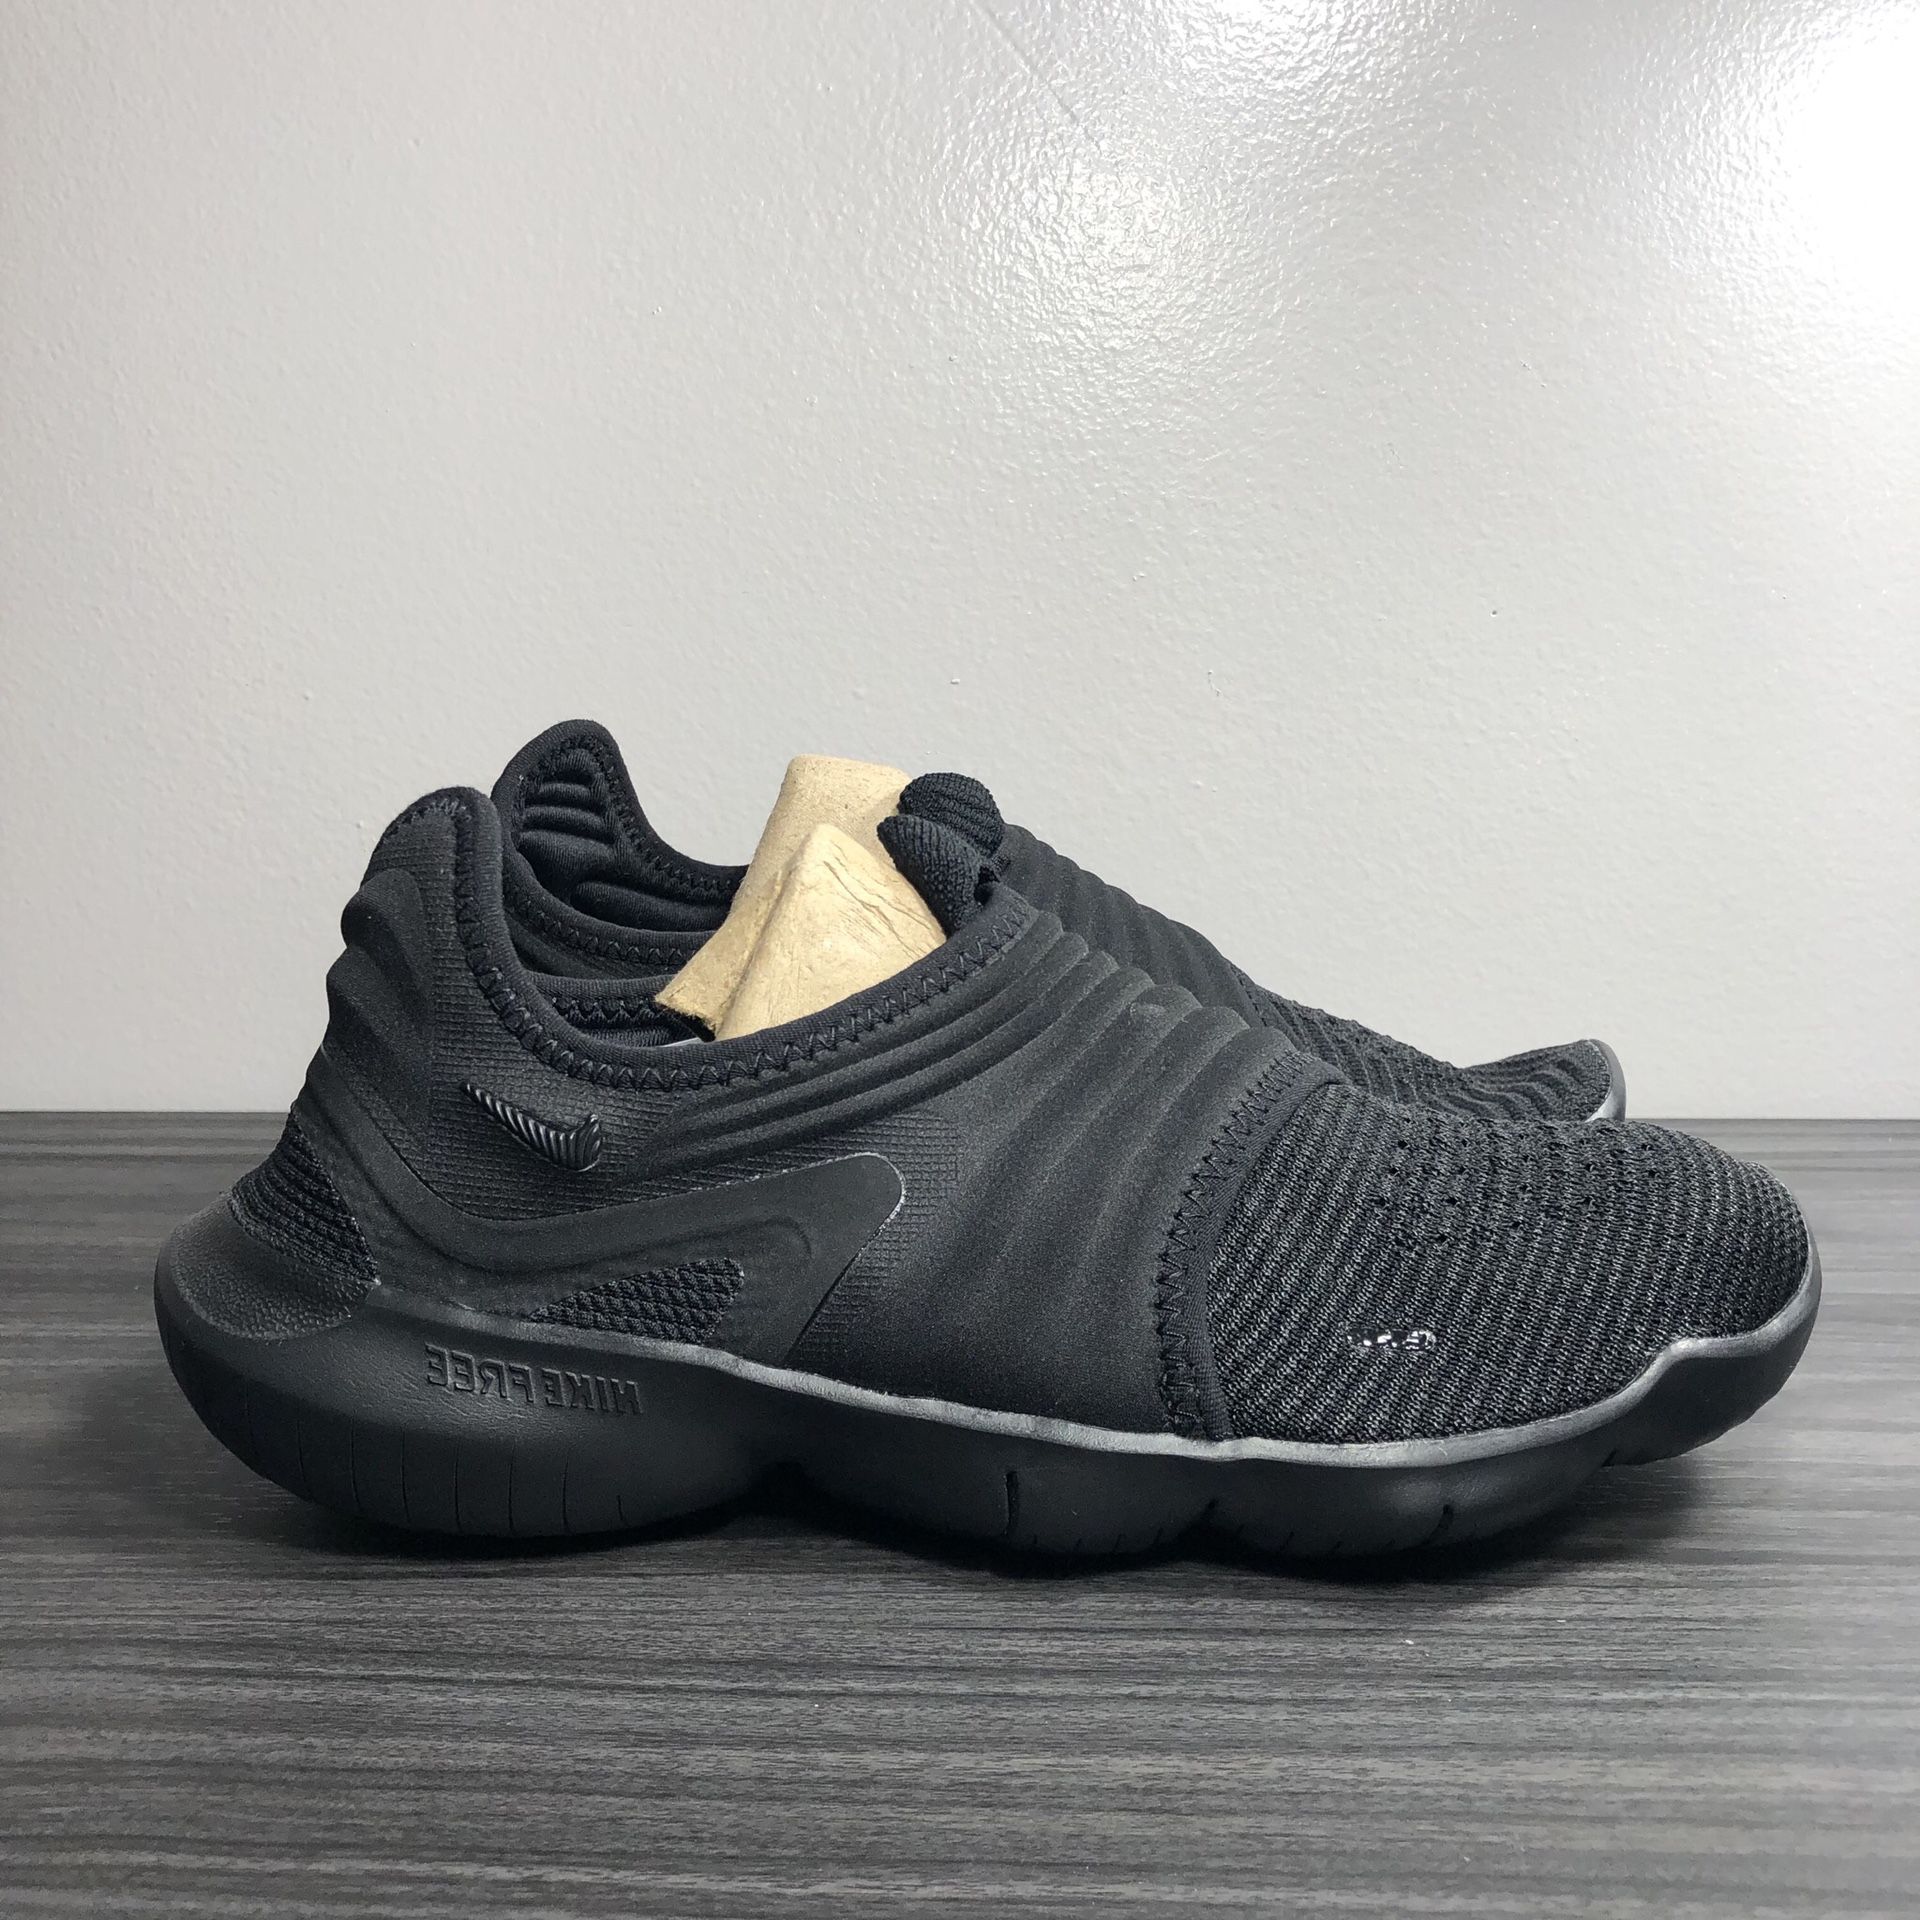 NIKE Free RN Flyknit 3.0 Triple Black Running Shoes